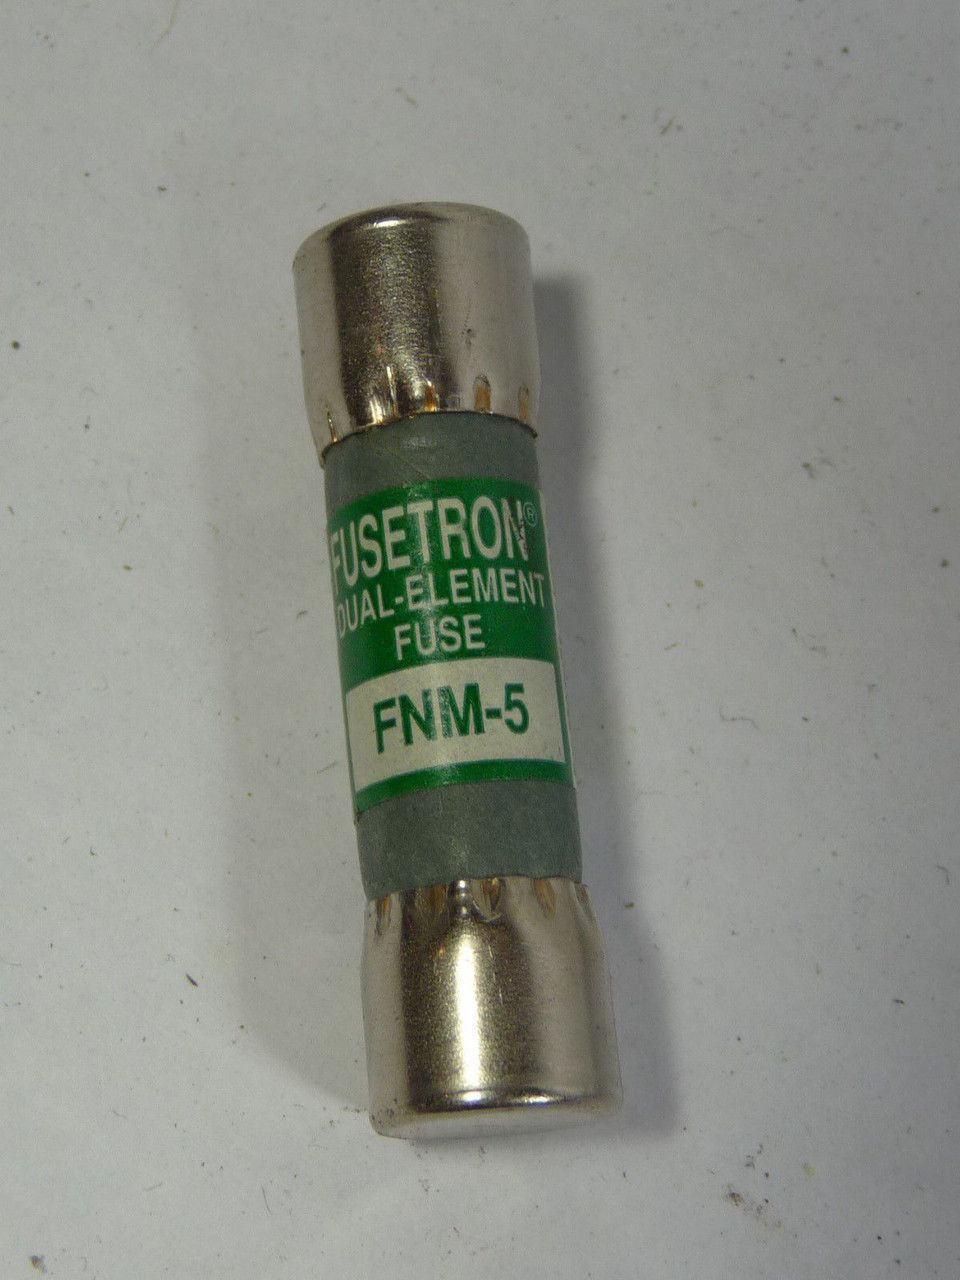 Fusetron FNM-5 Dual-Element Fuse 5A 250V USED